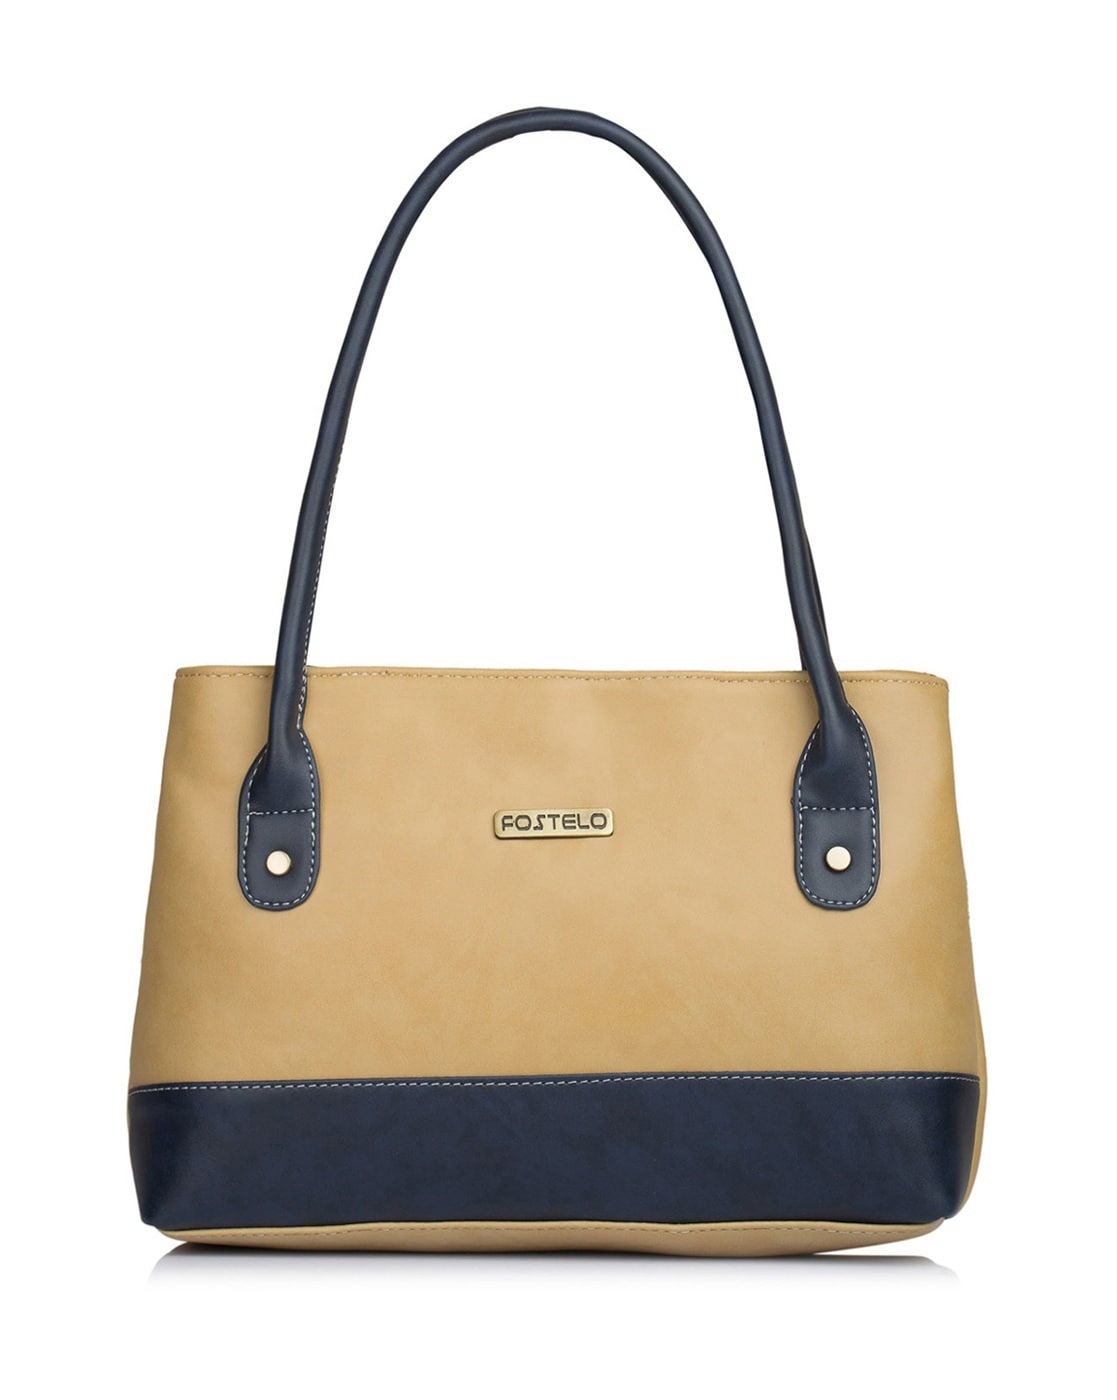 ZARA bag - ALDO bag - Branded bags for sale - Zara clutch - Aldo clutch -  two-way bags, Women's Fashion, Bags & Wallets, Purses & Pouches on Carousell